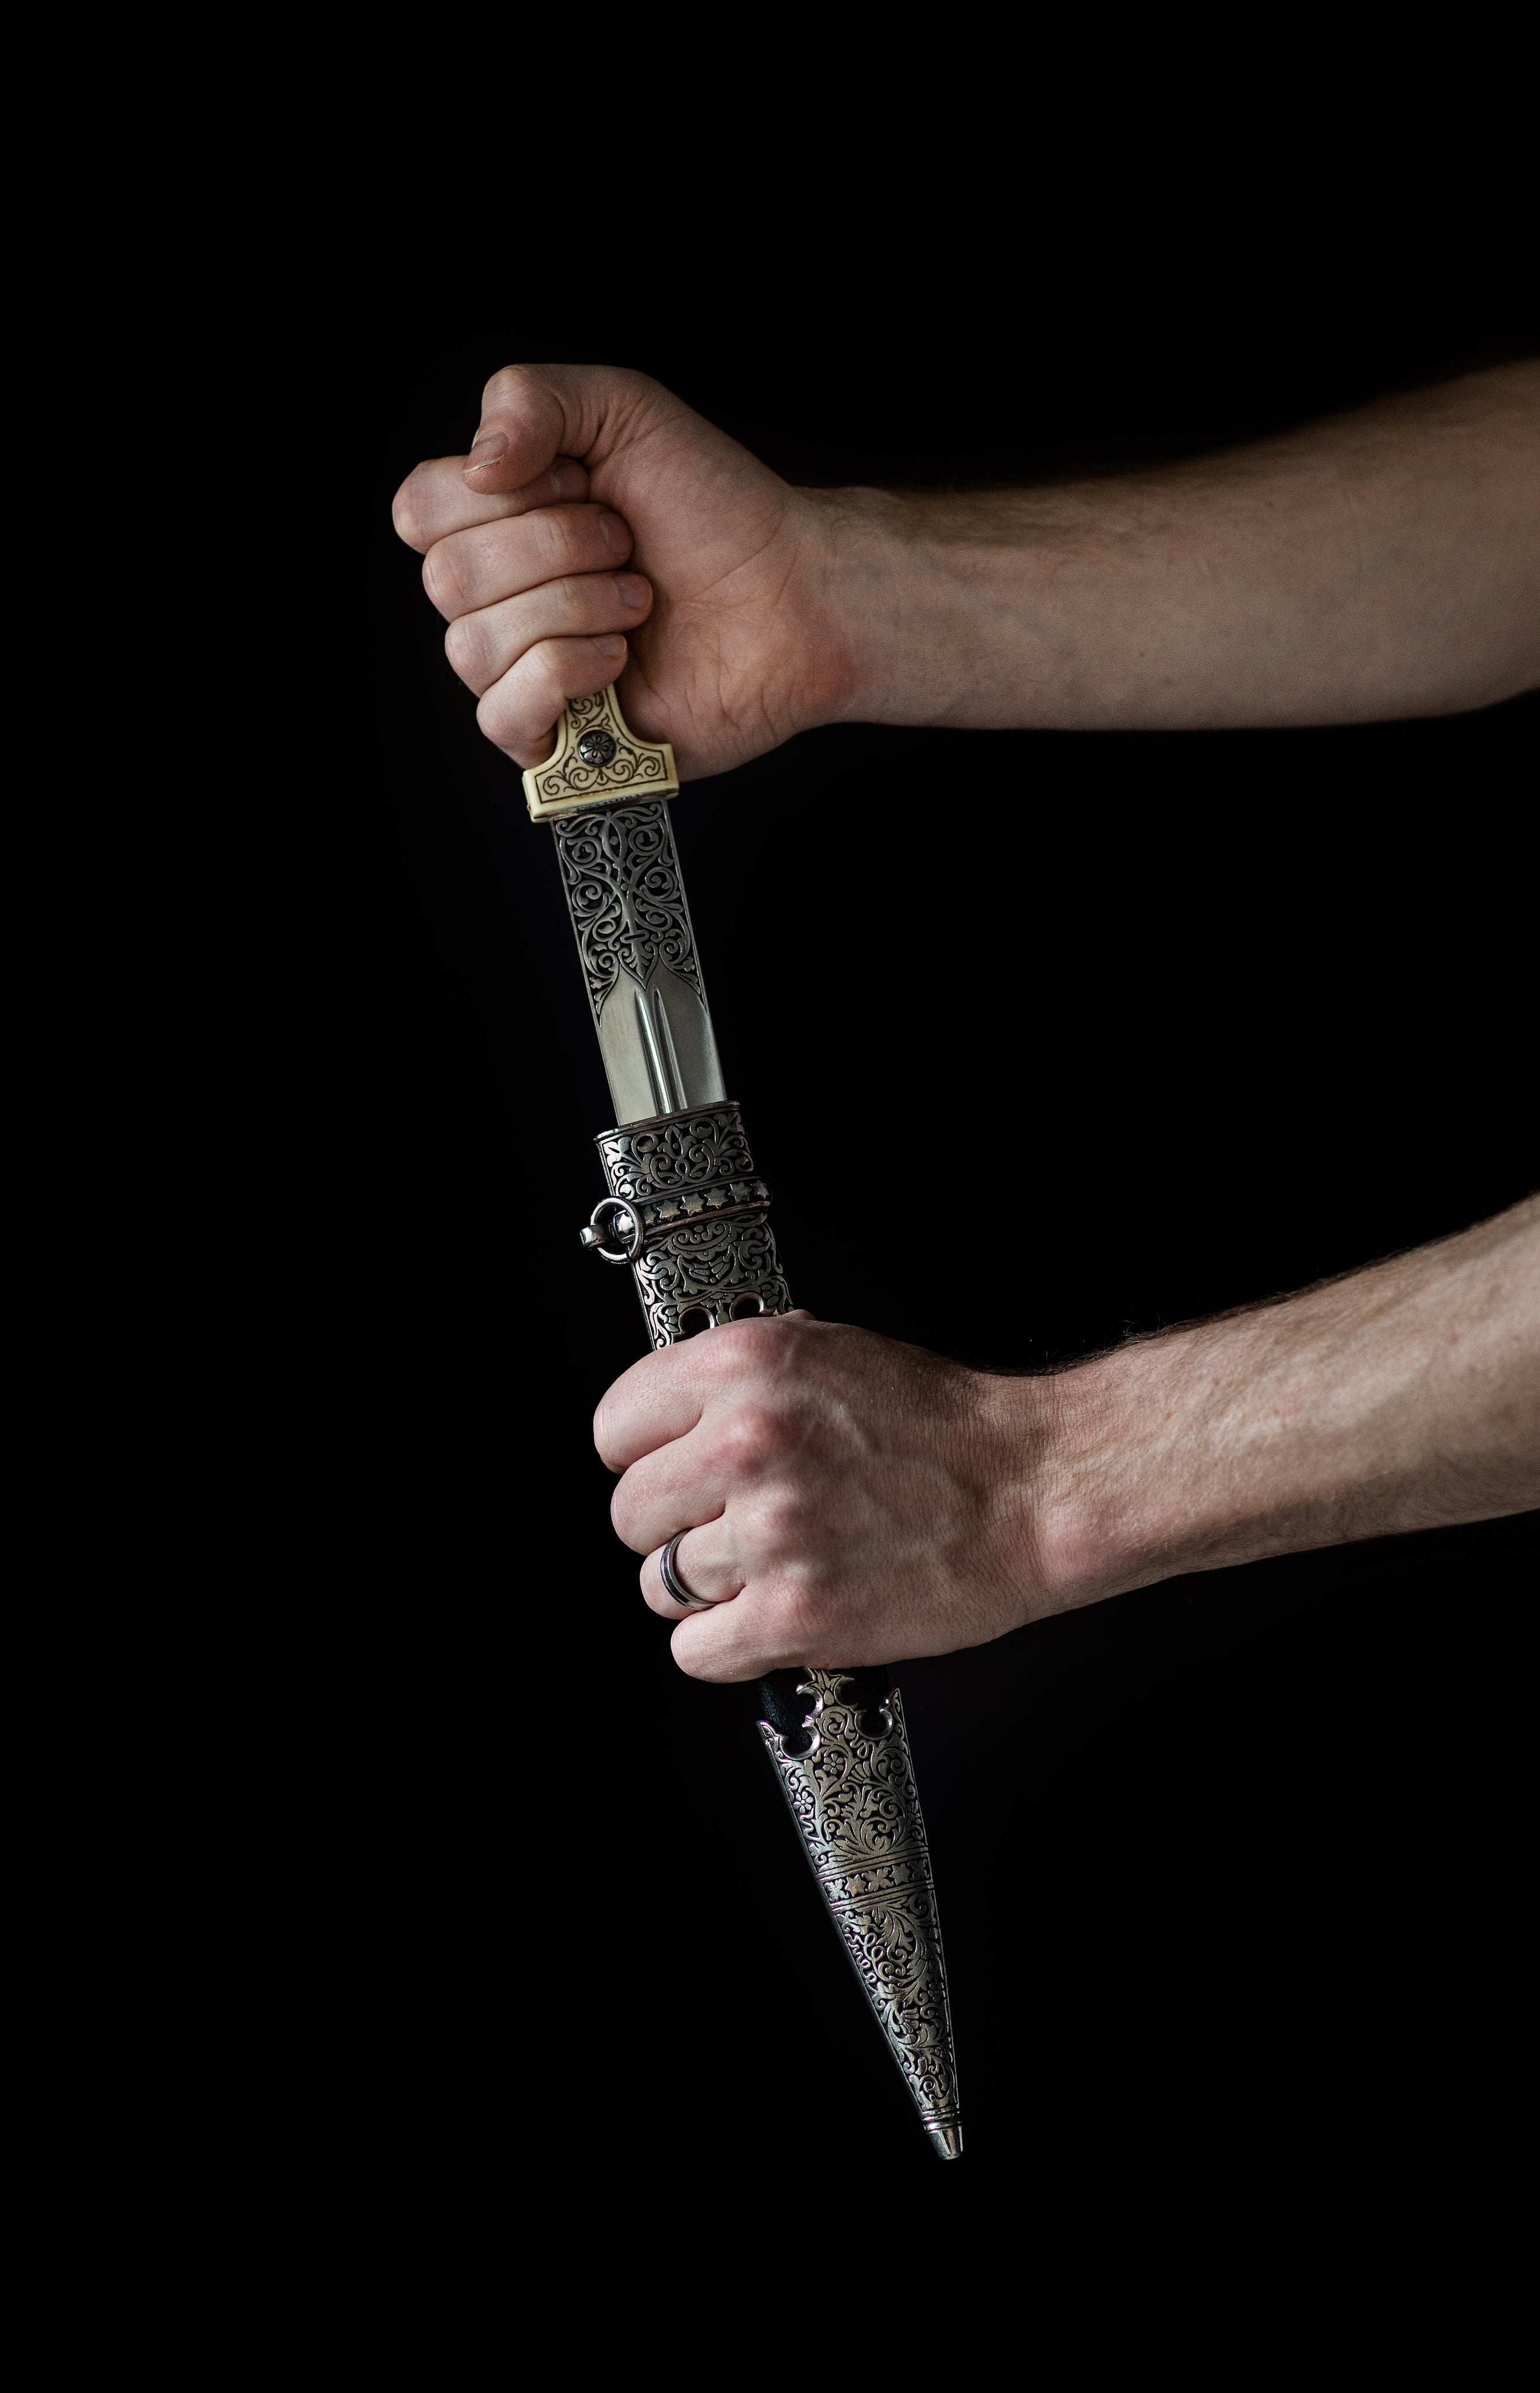 a-hand-draws-an-ornate-dagger-from-its-sheath.jpg